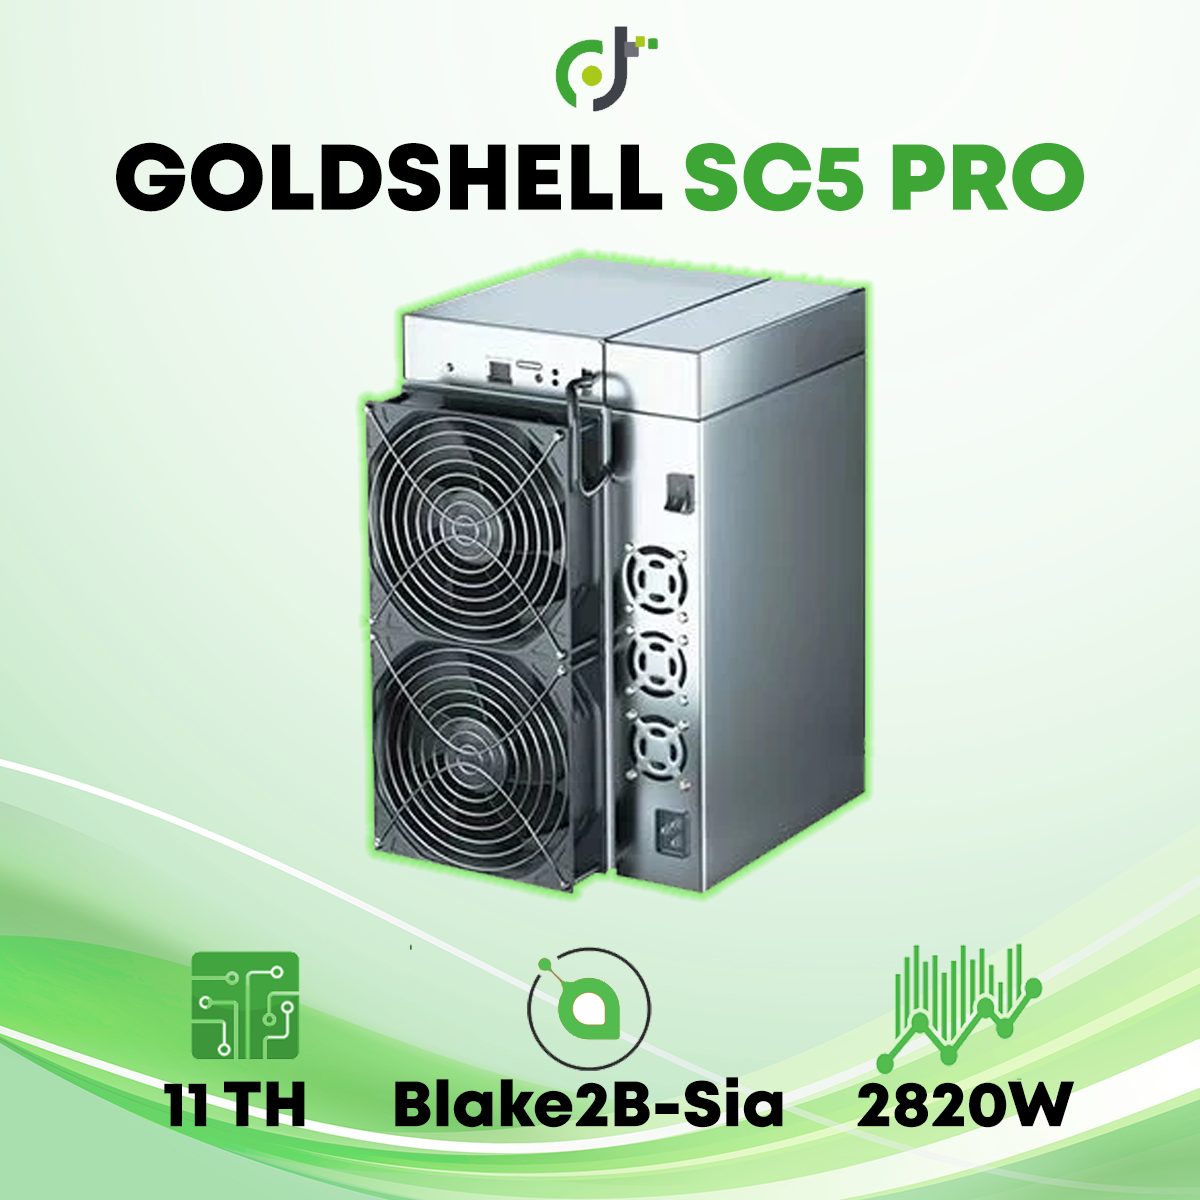 Goldshell SC5 Pro (11TH) Blake2B-Sia Crypto ASIC Miner